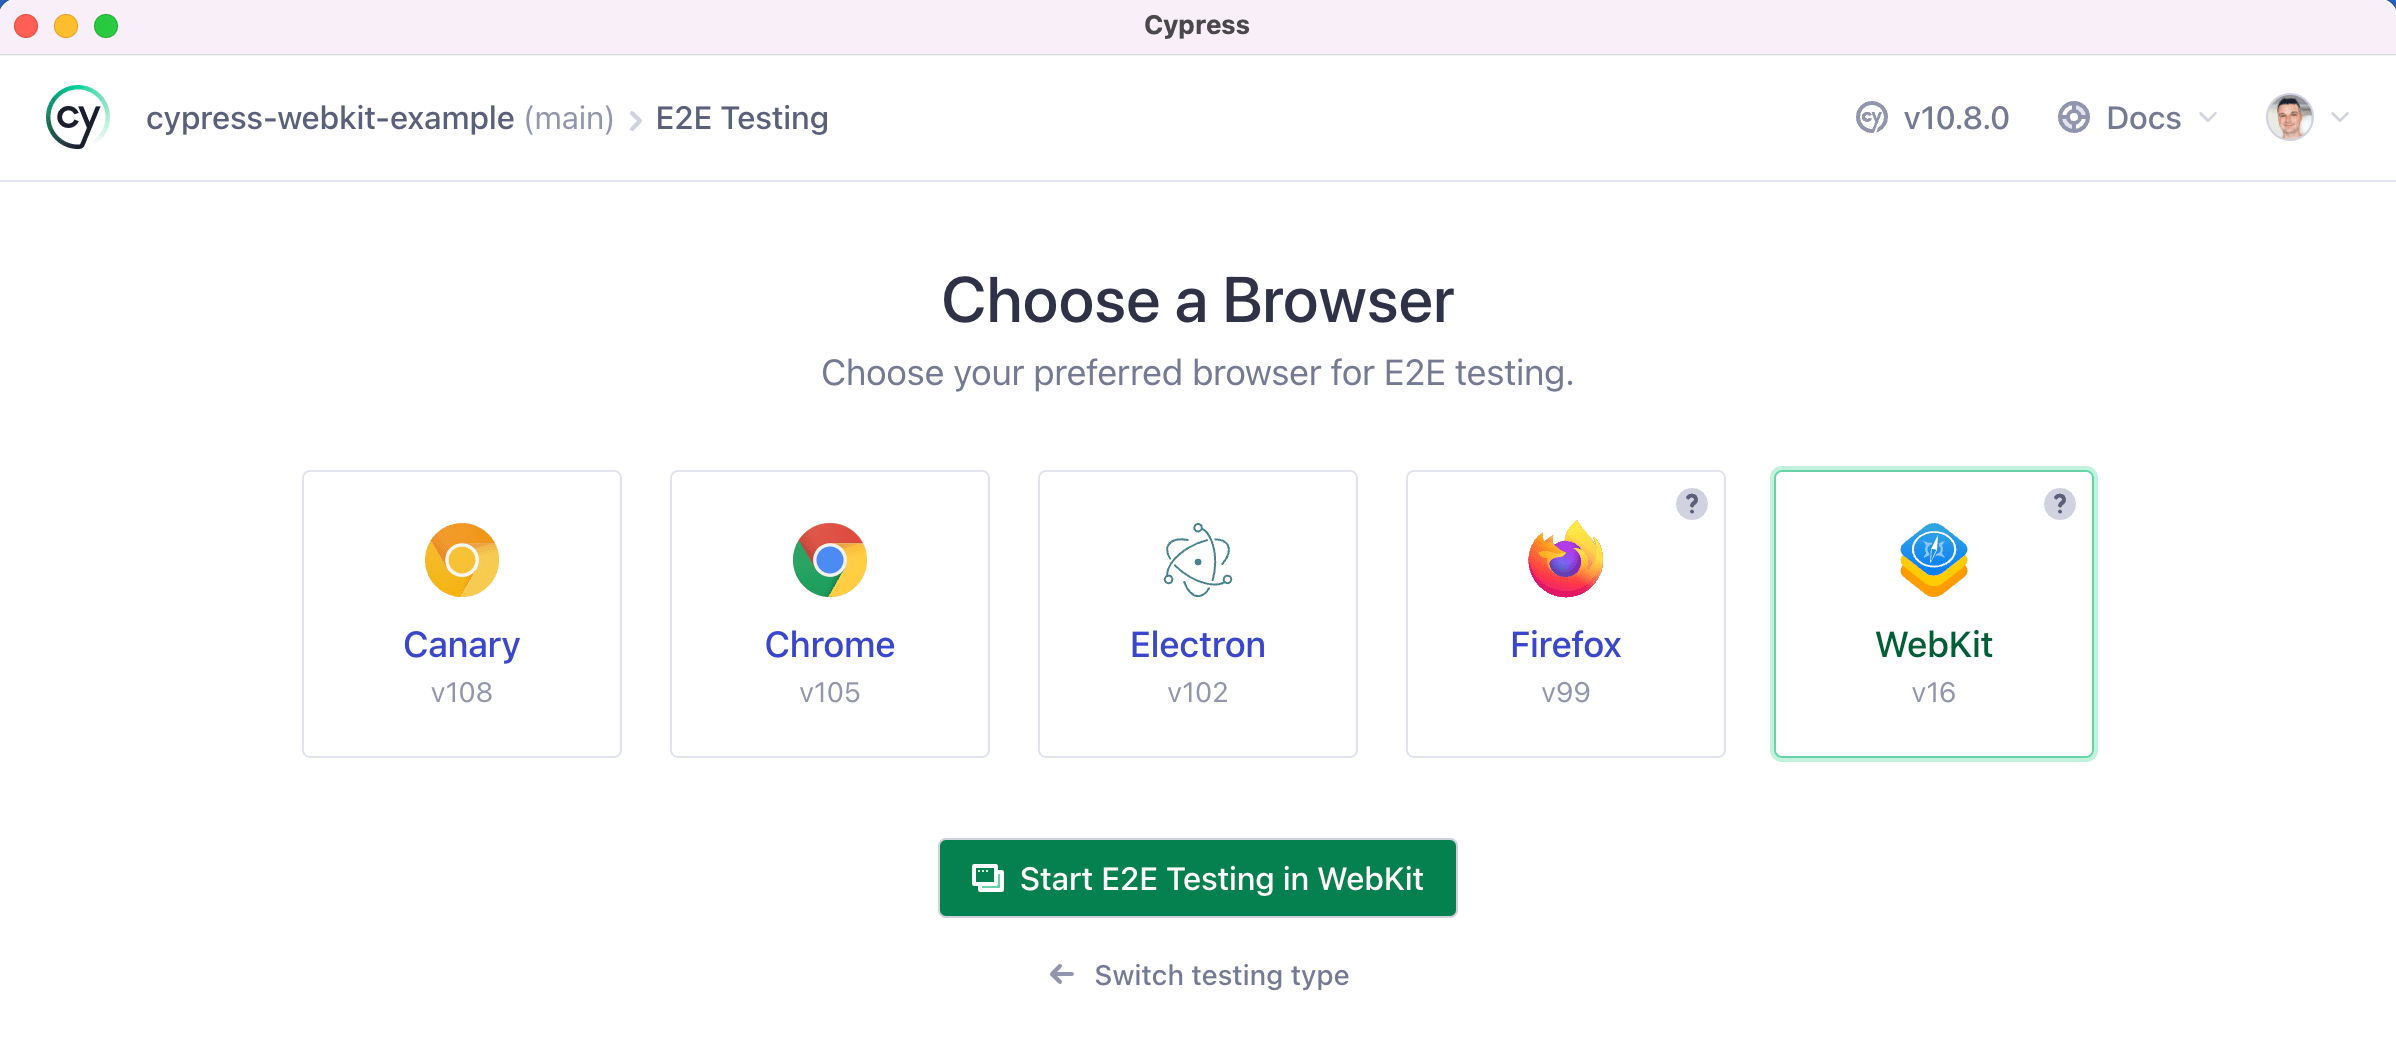 WebKit browser shown inside Cypress list of browsers